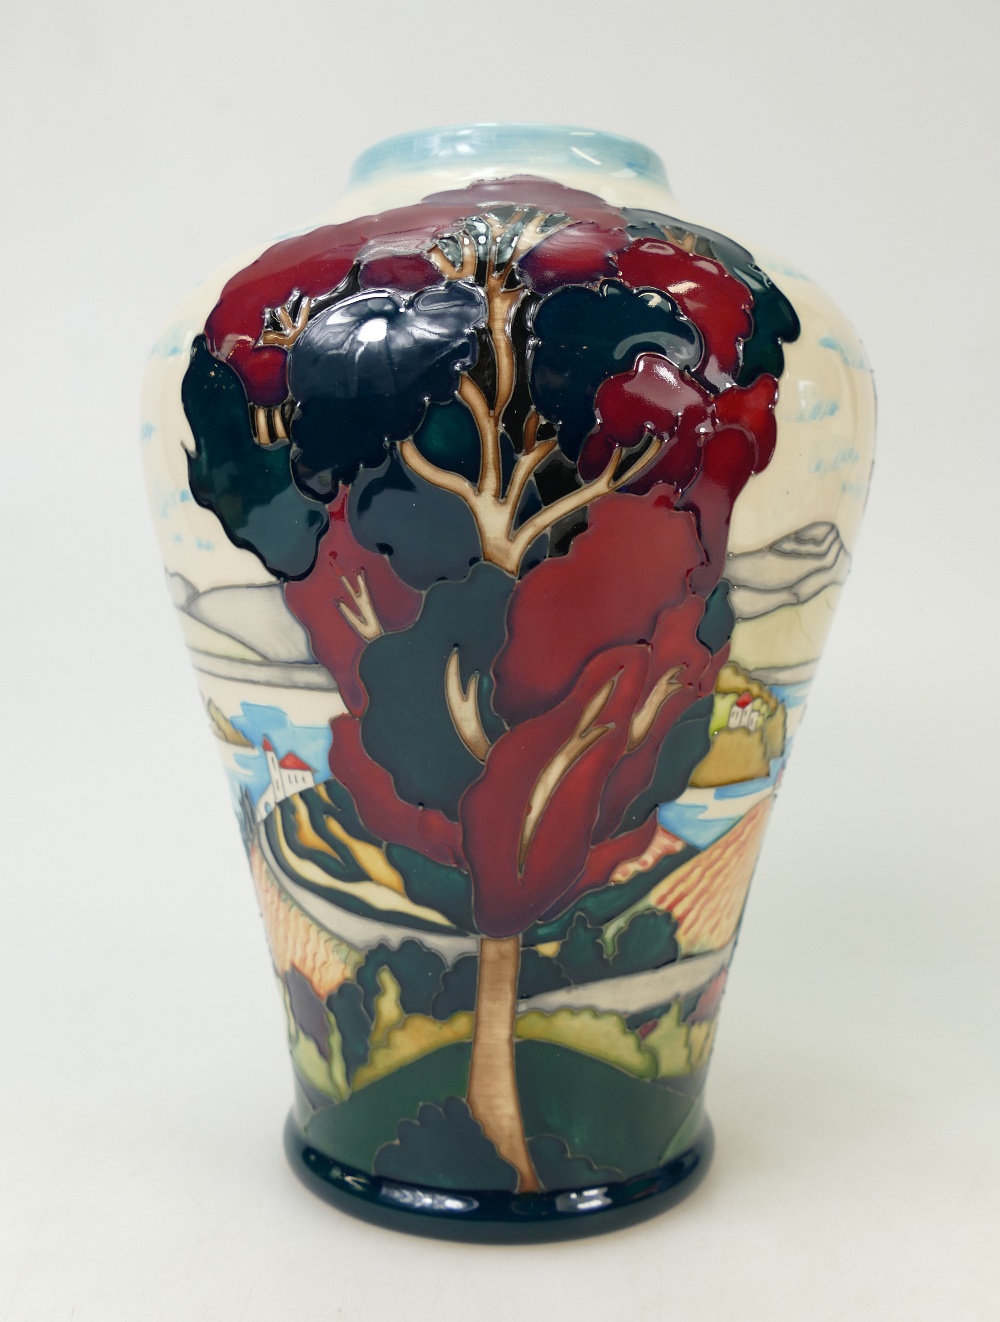 Moorcroft Italian Lakes Vase: A trial Italian Lakes vase - 24.11.15. 22cm high.